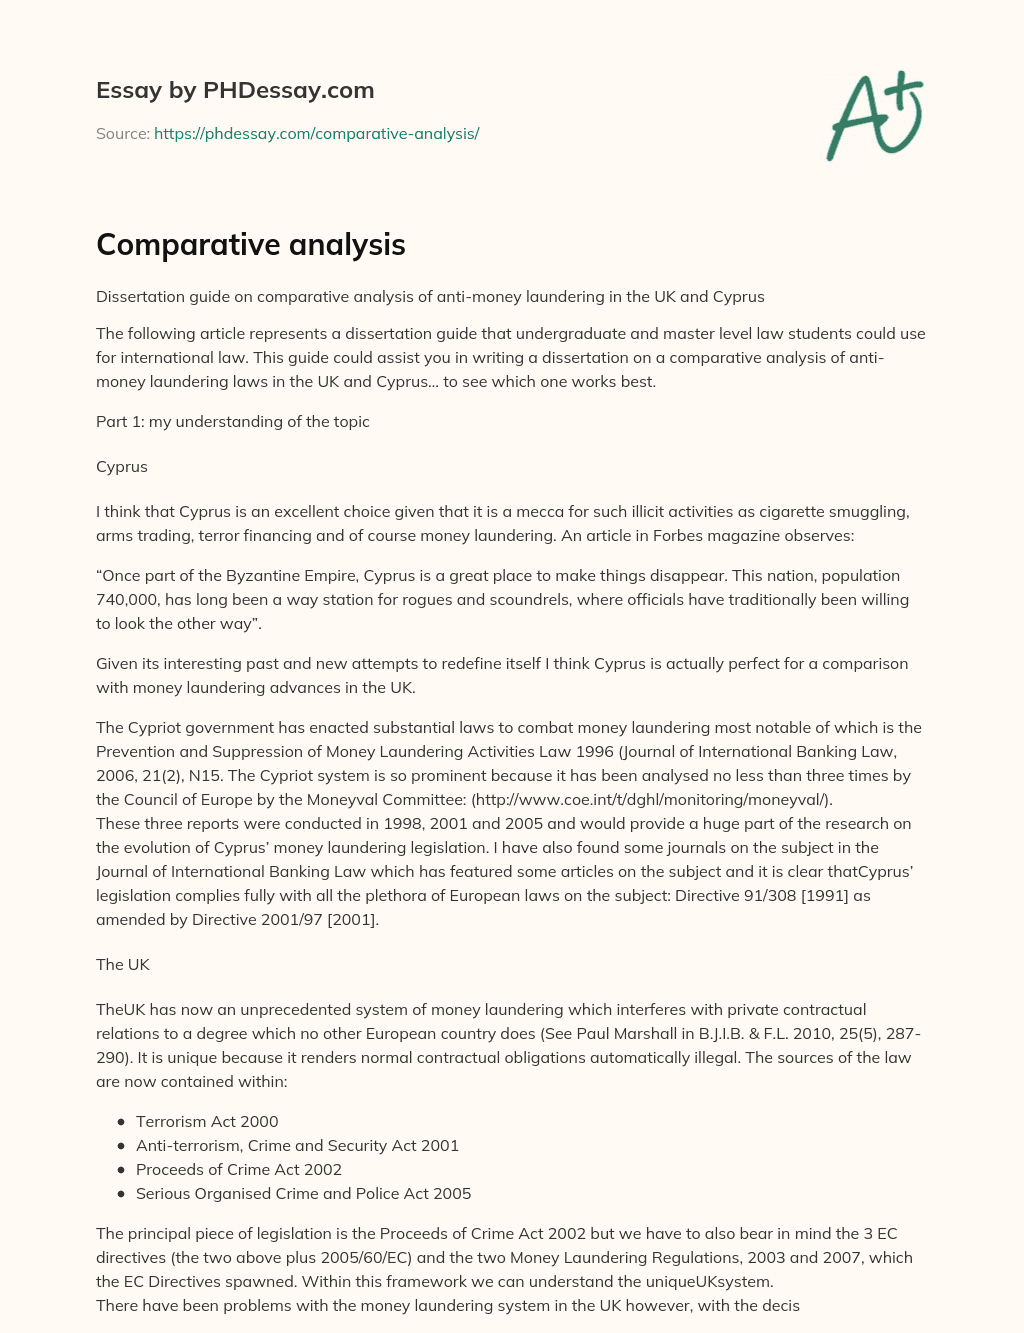 comparative analysis model essay